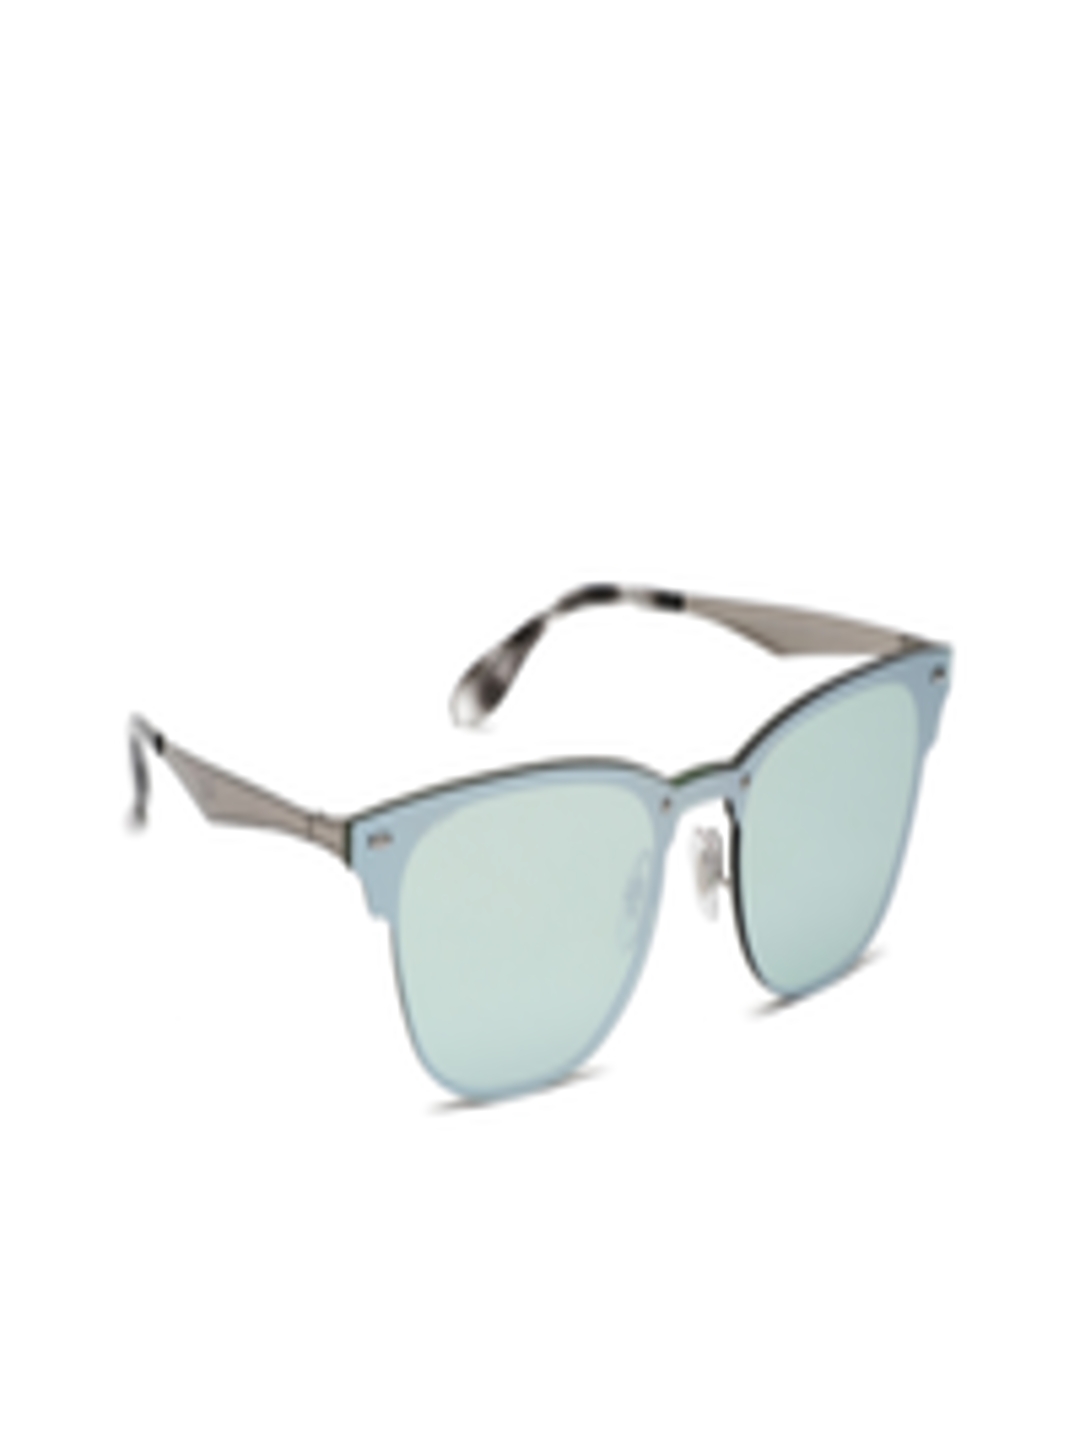 Buy Ray Ban Unisex Mirrored Square Sunglasses - Sunglasses for Unisex